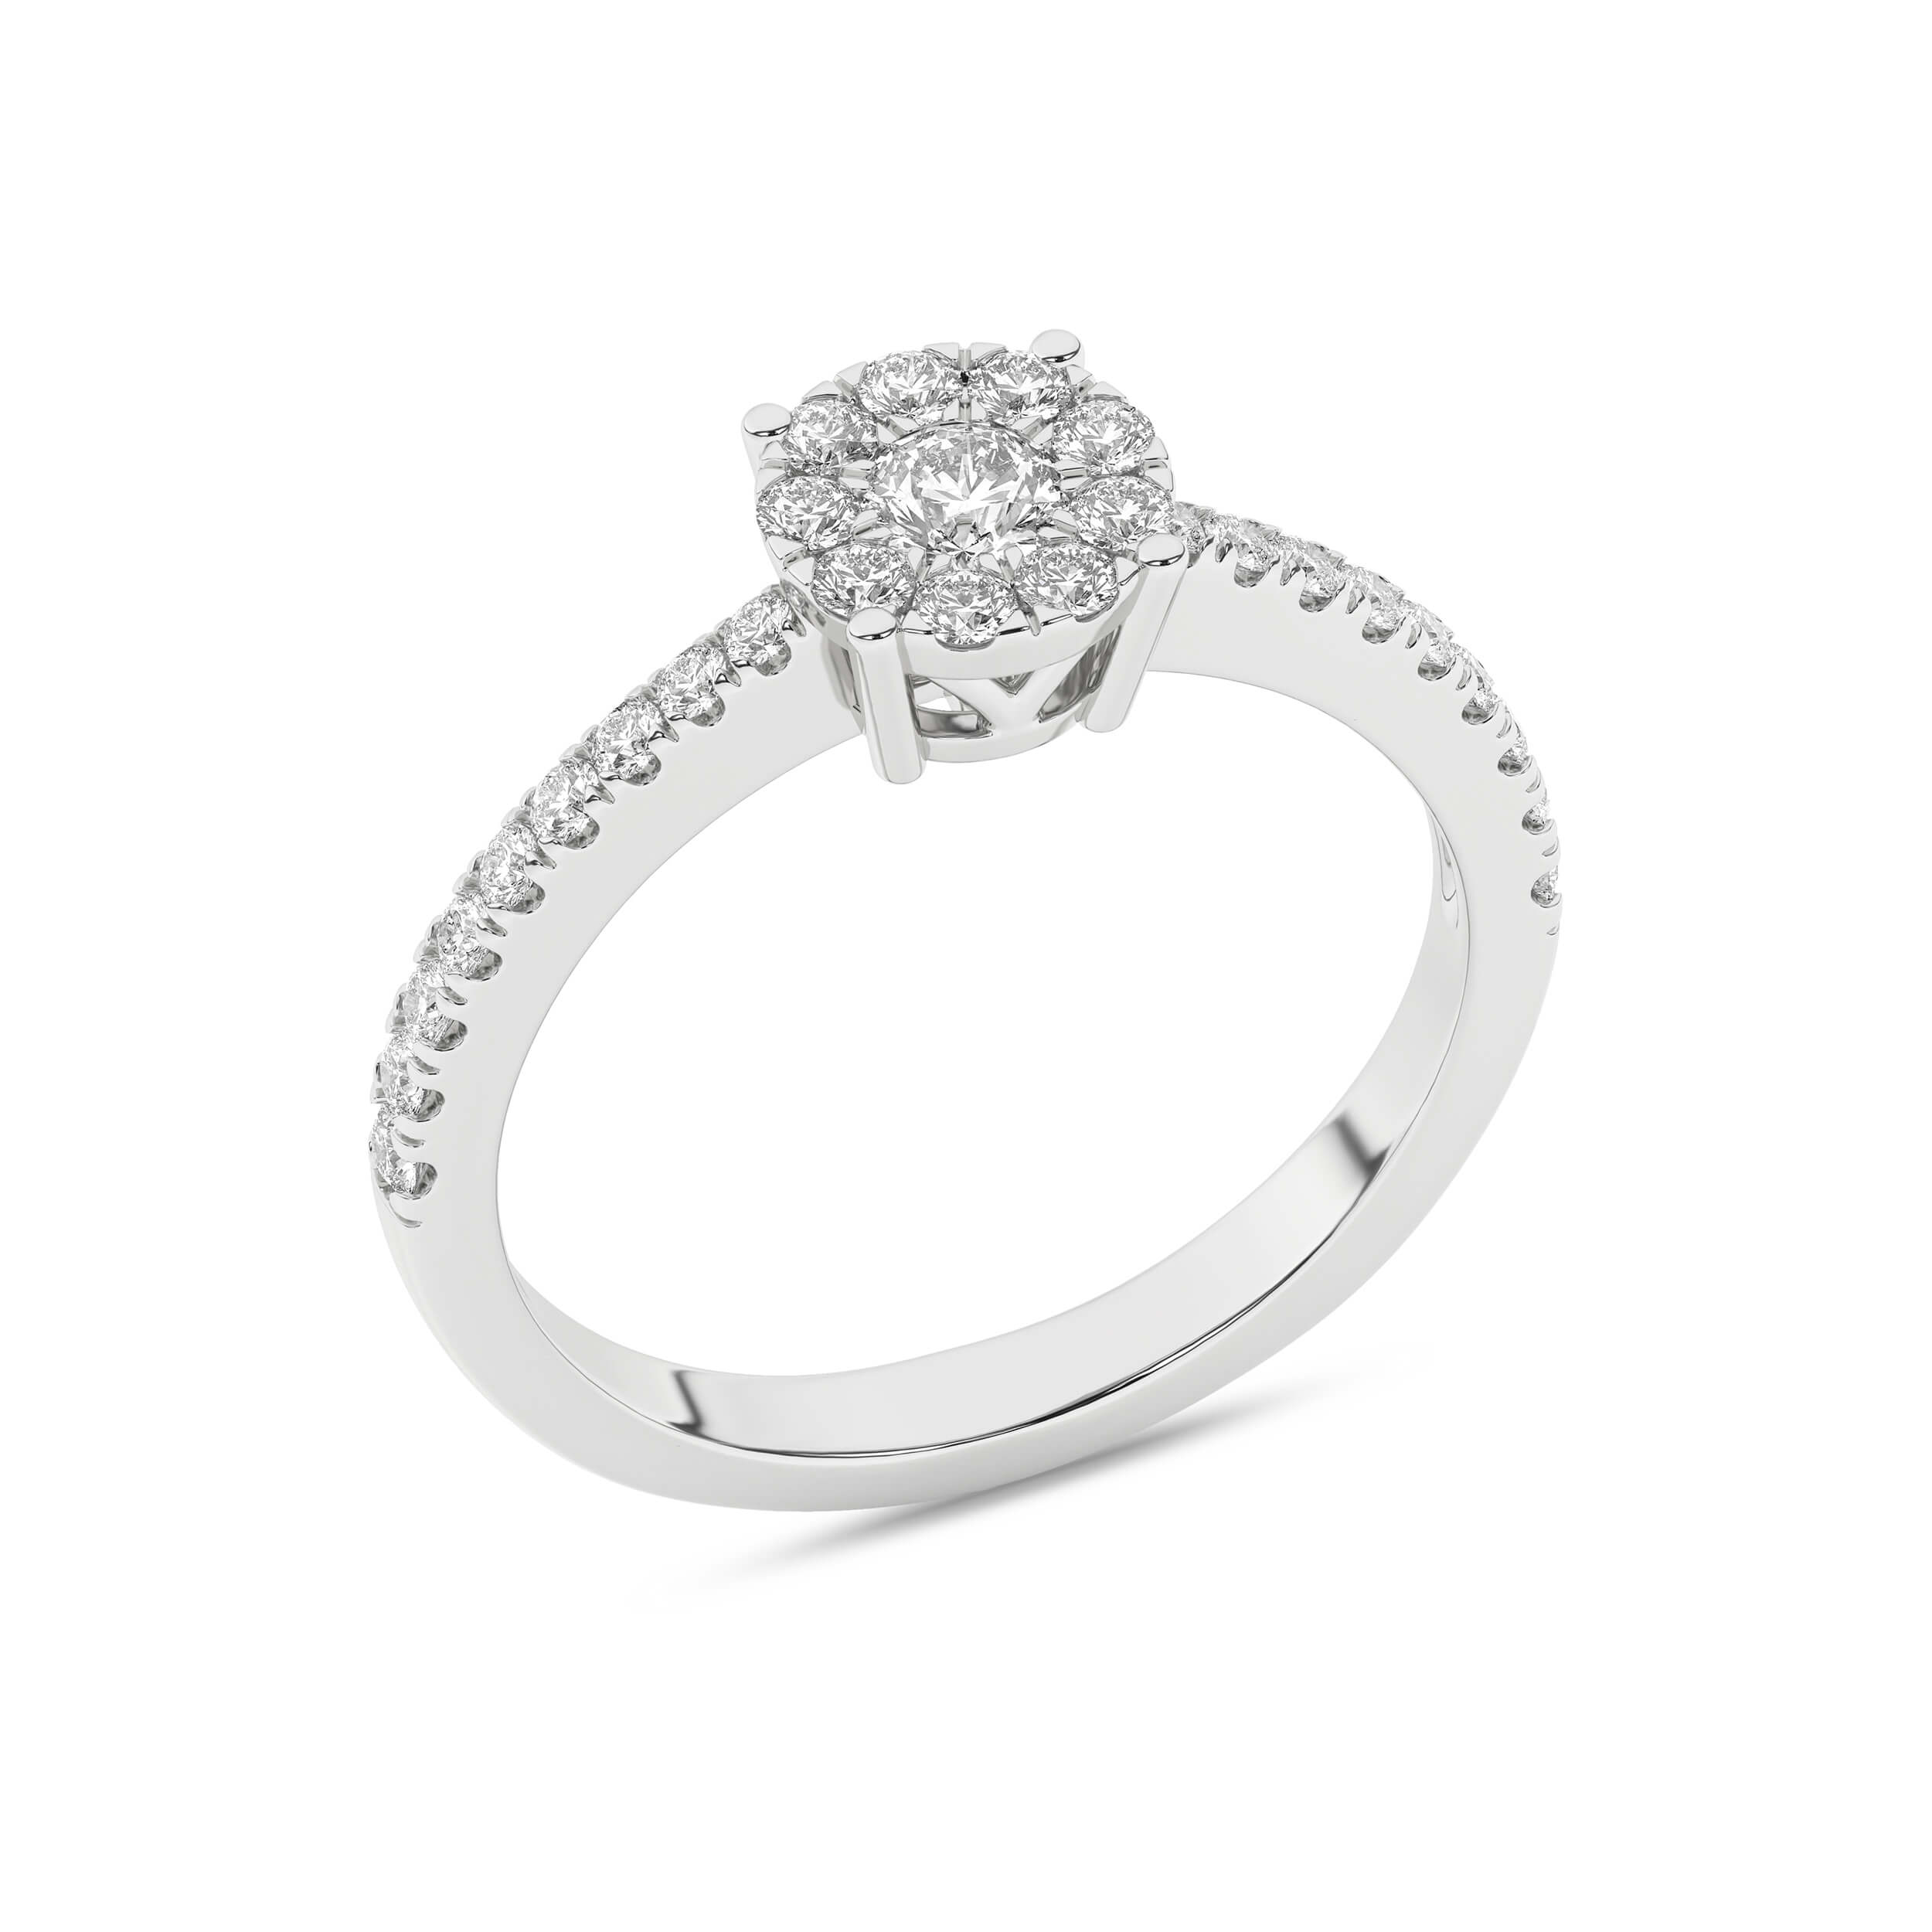 Inel de logodna din Aur Alb 14K cu Diamante 0.40Ct, articol RC4052, previzualizare foto 4